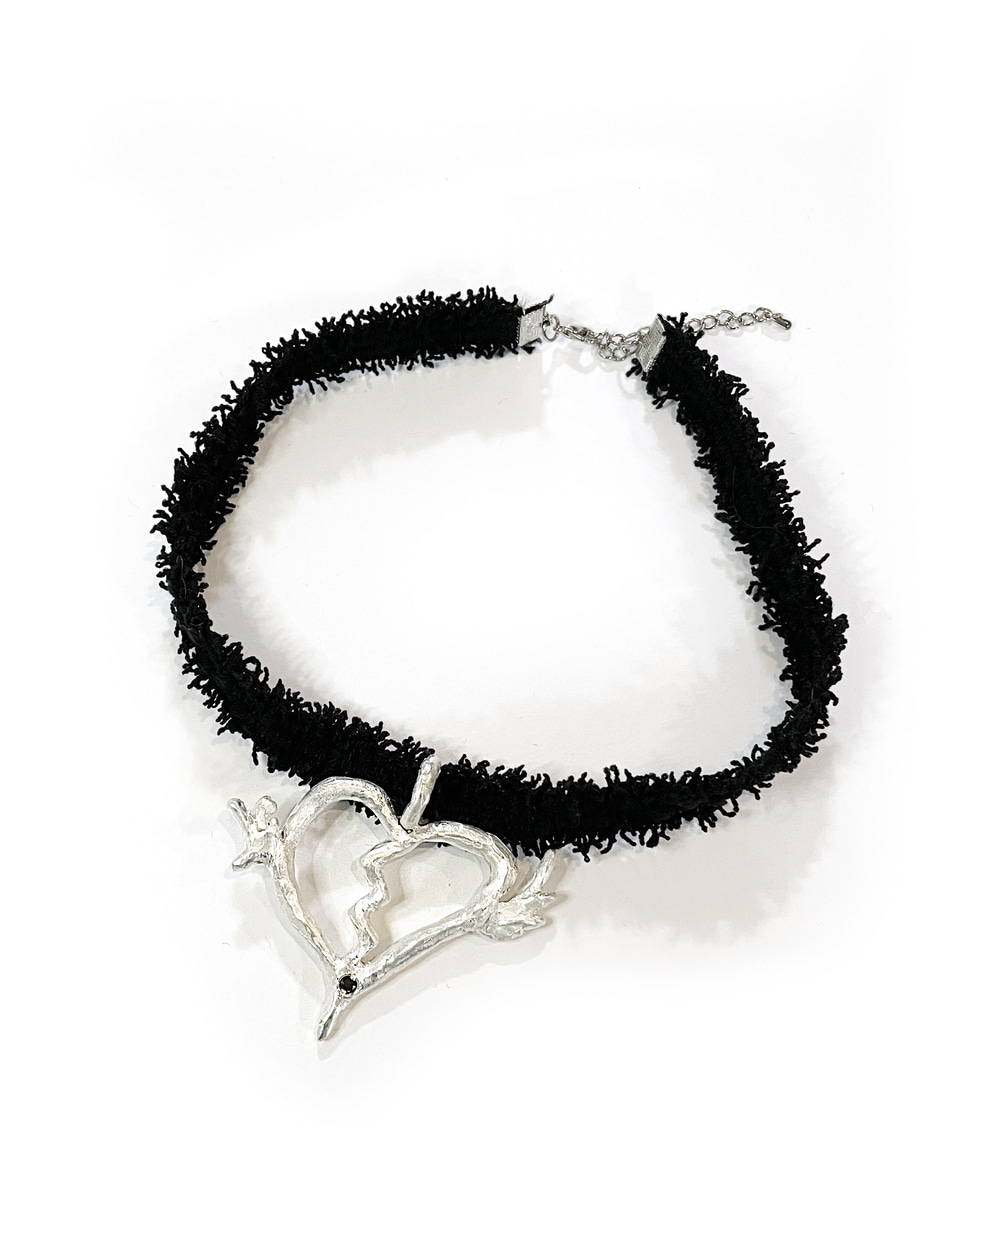 AECL silver heart necklace